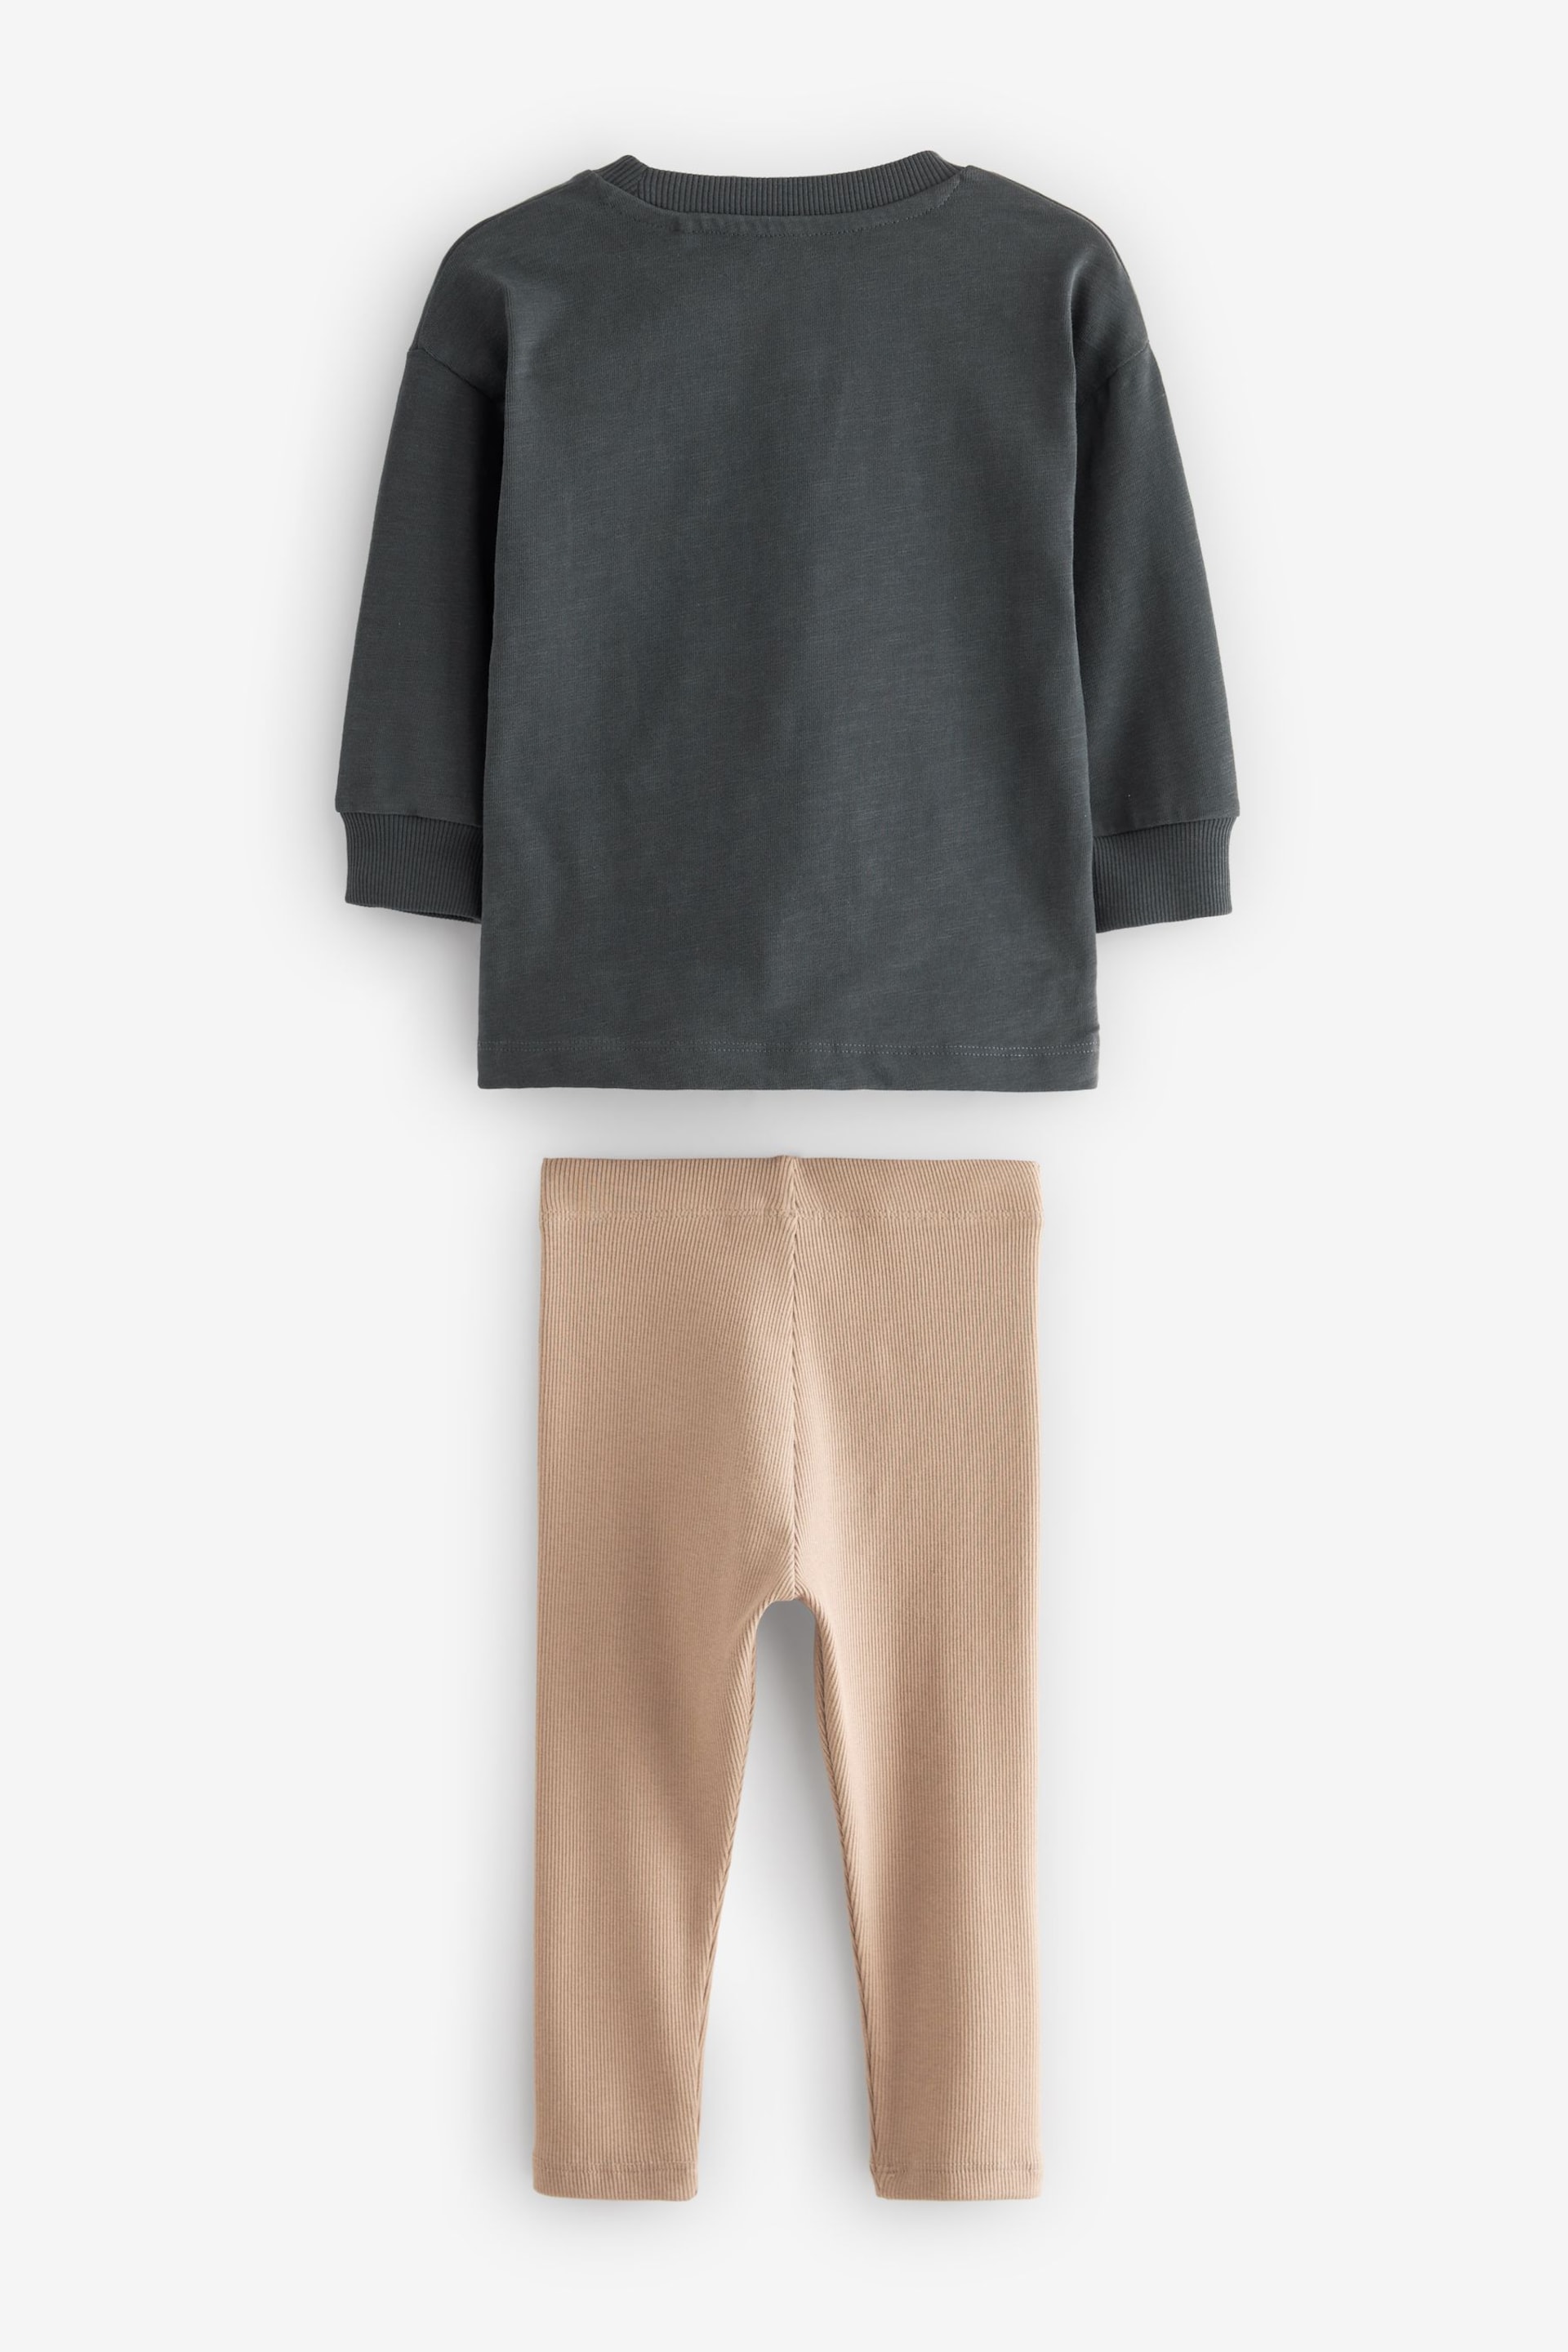 Charcoal Grey Long Sleeve T-Shirt and Leggings Set (3mths-7yrs) - Image 7 of 9